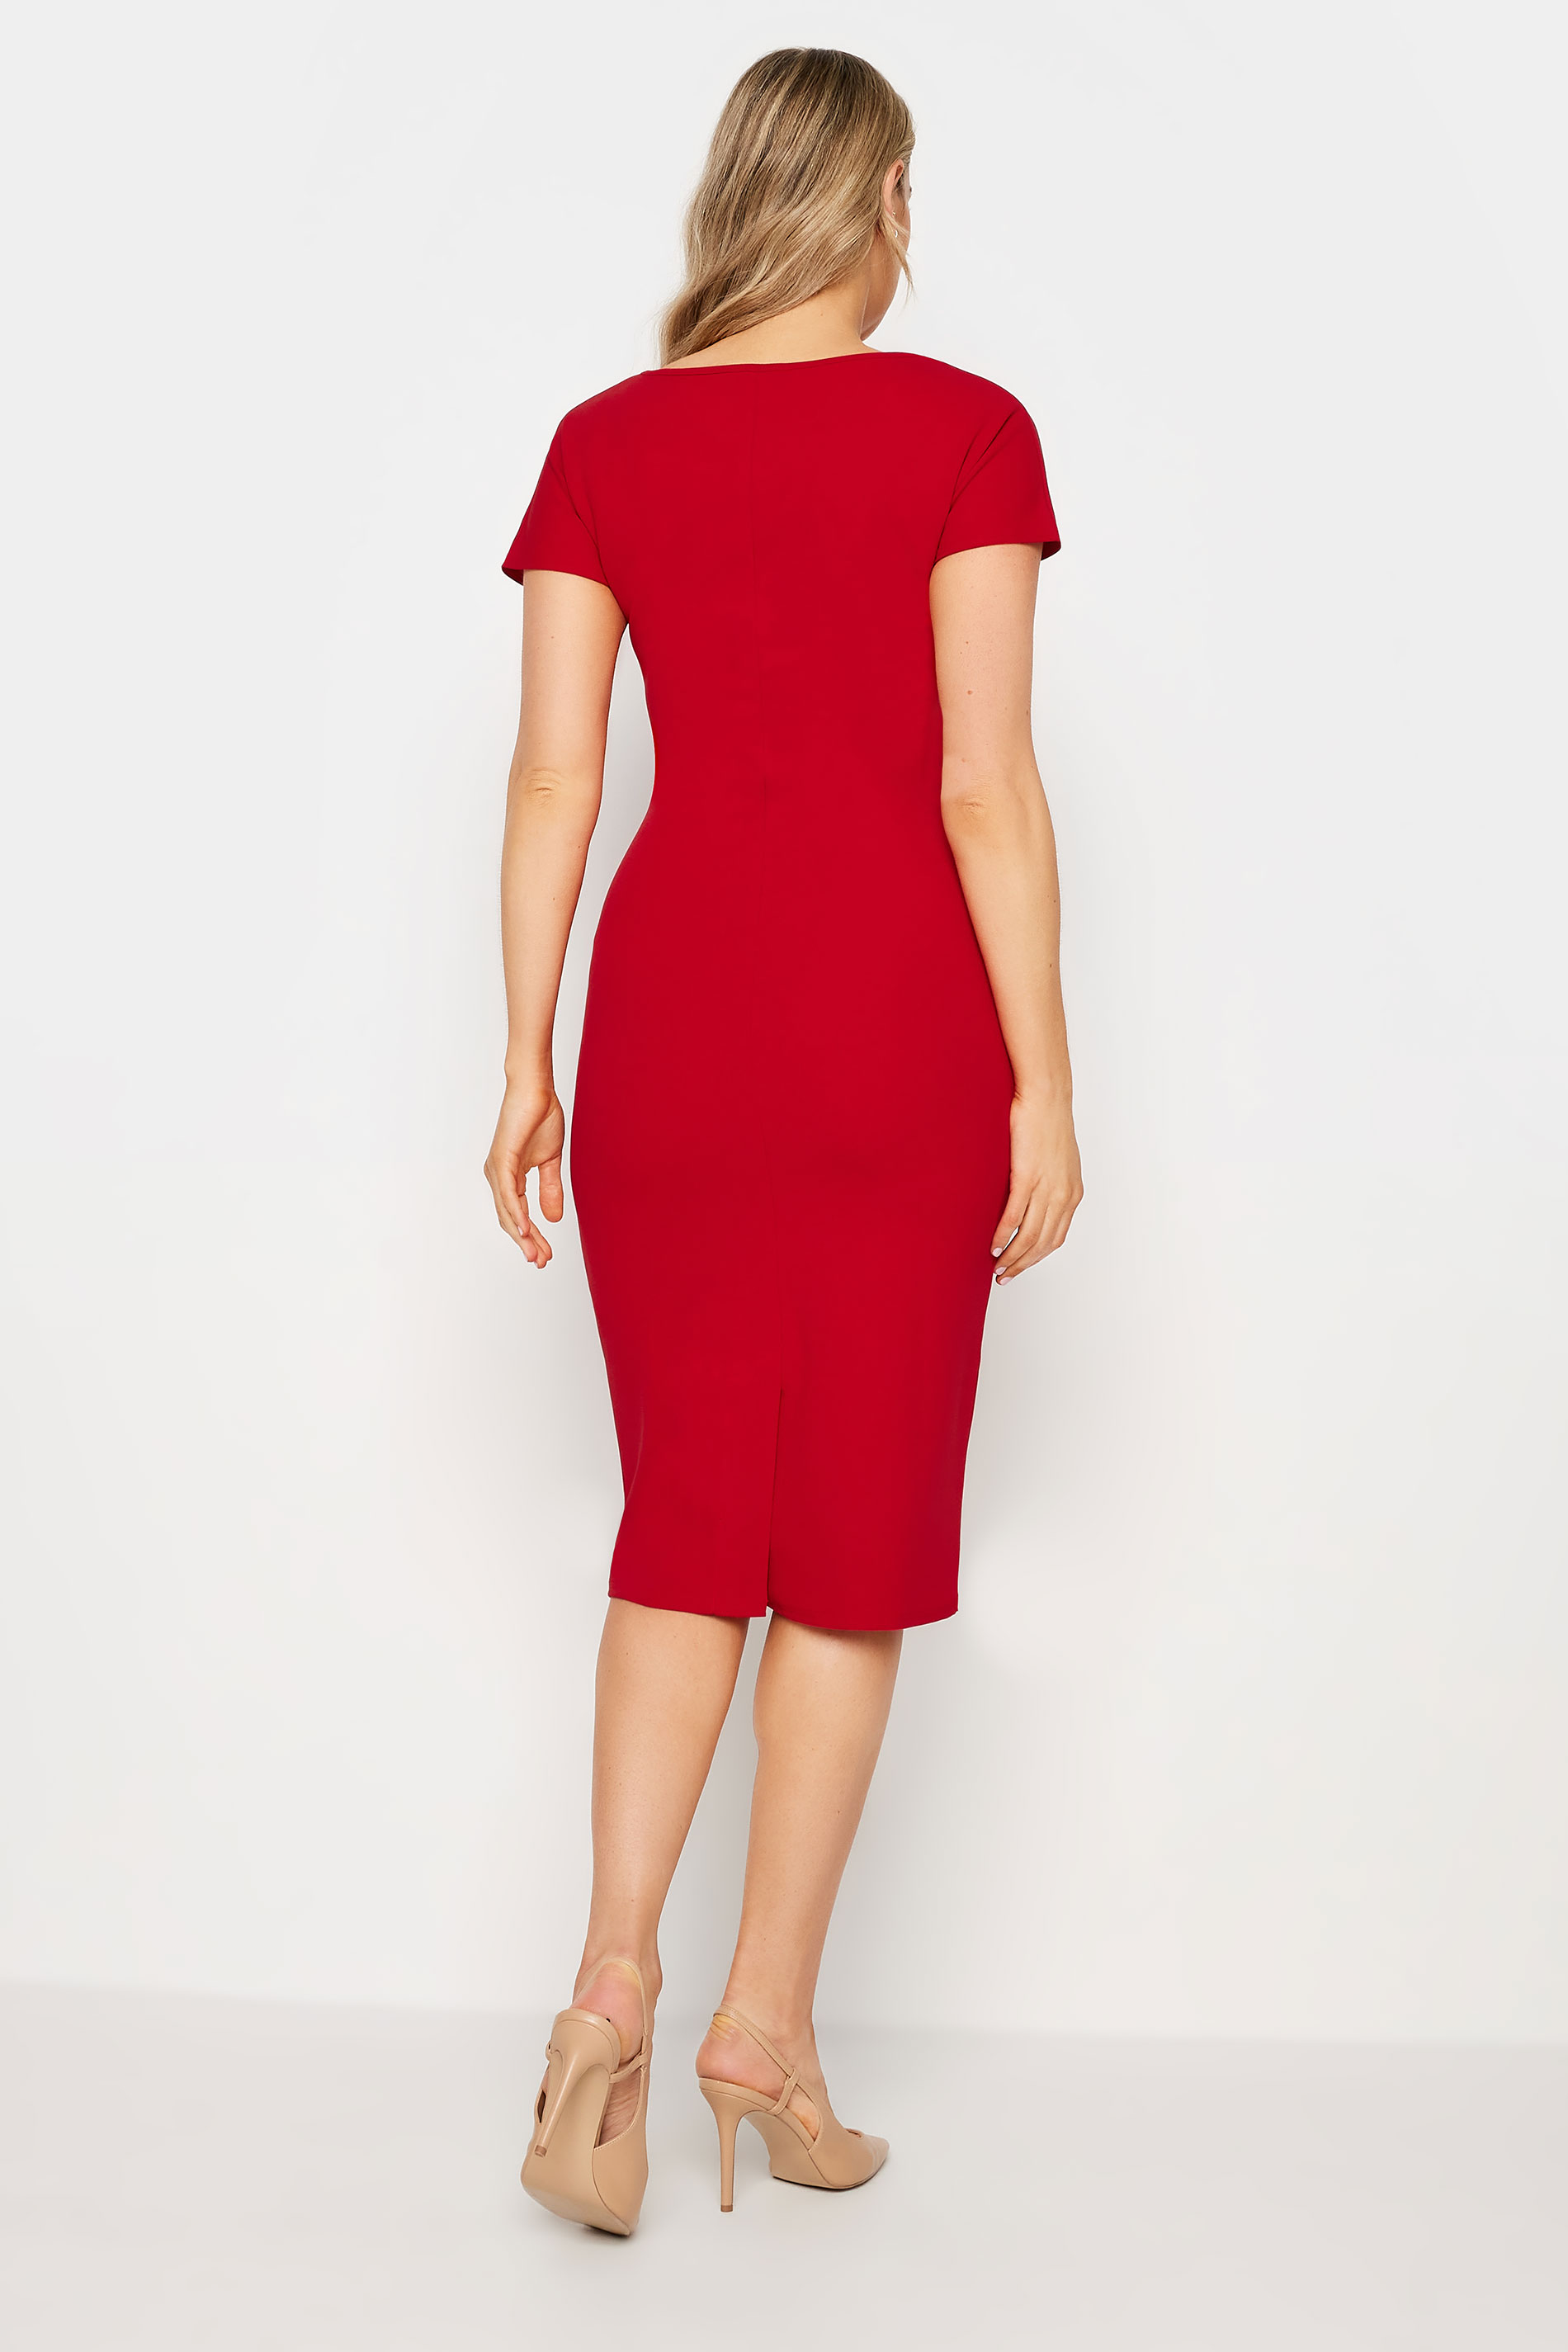 LTS Tall Women's Red Scoop Neck Midi Dress | Long Tall Sally 3